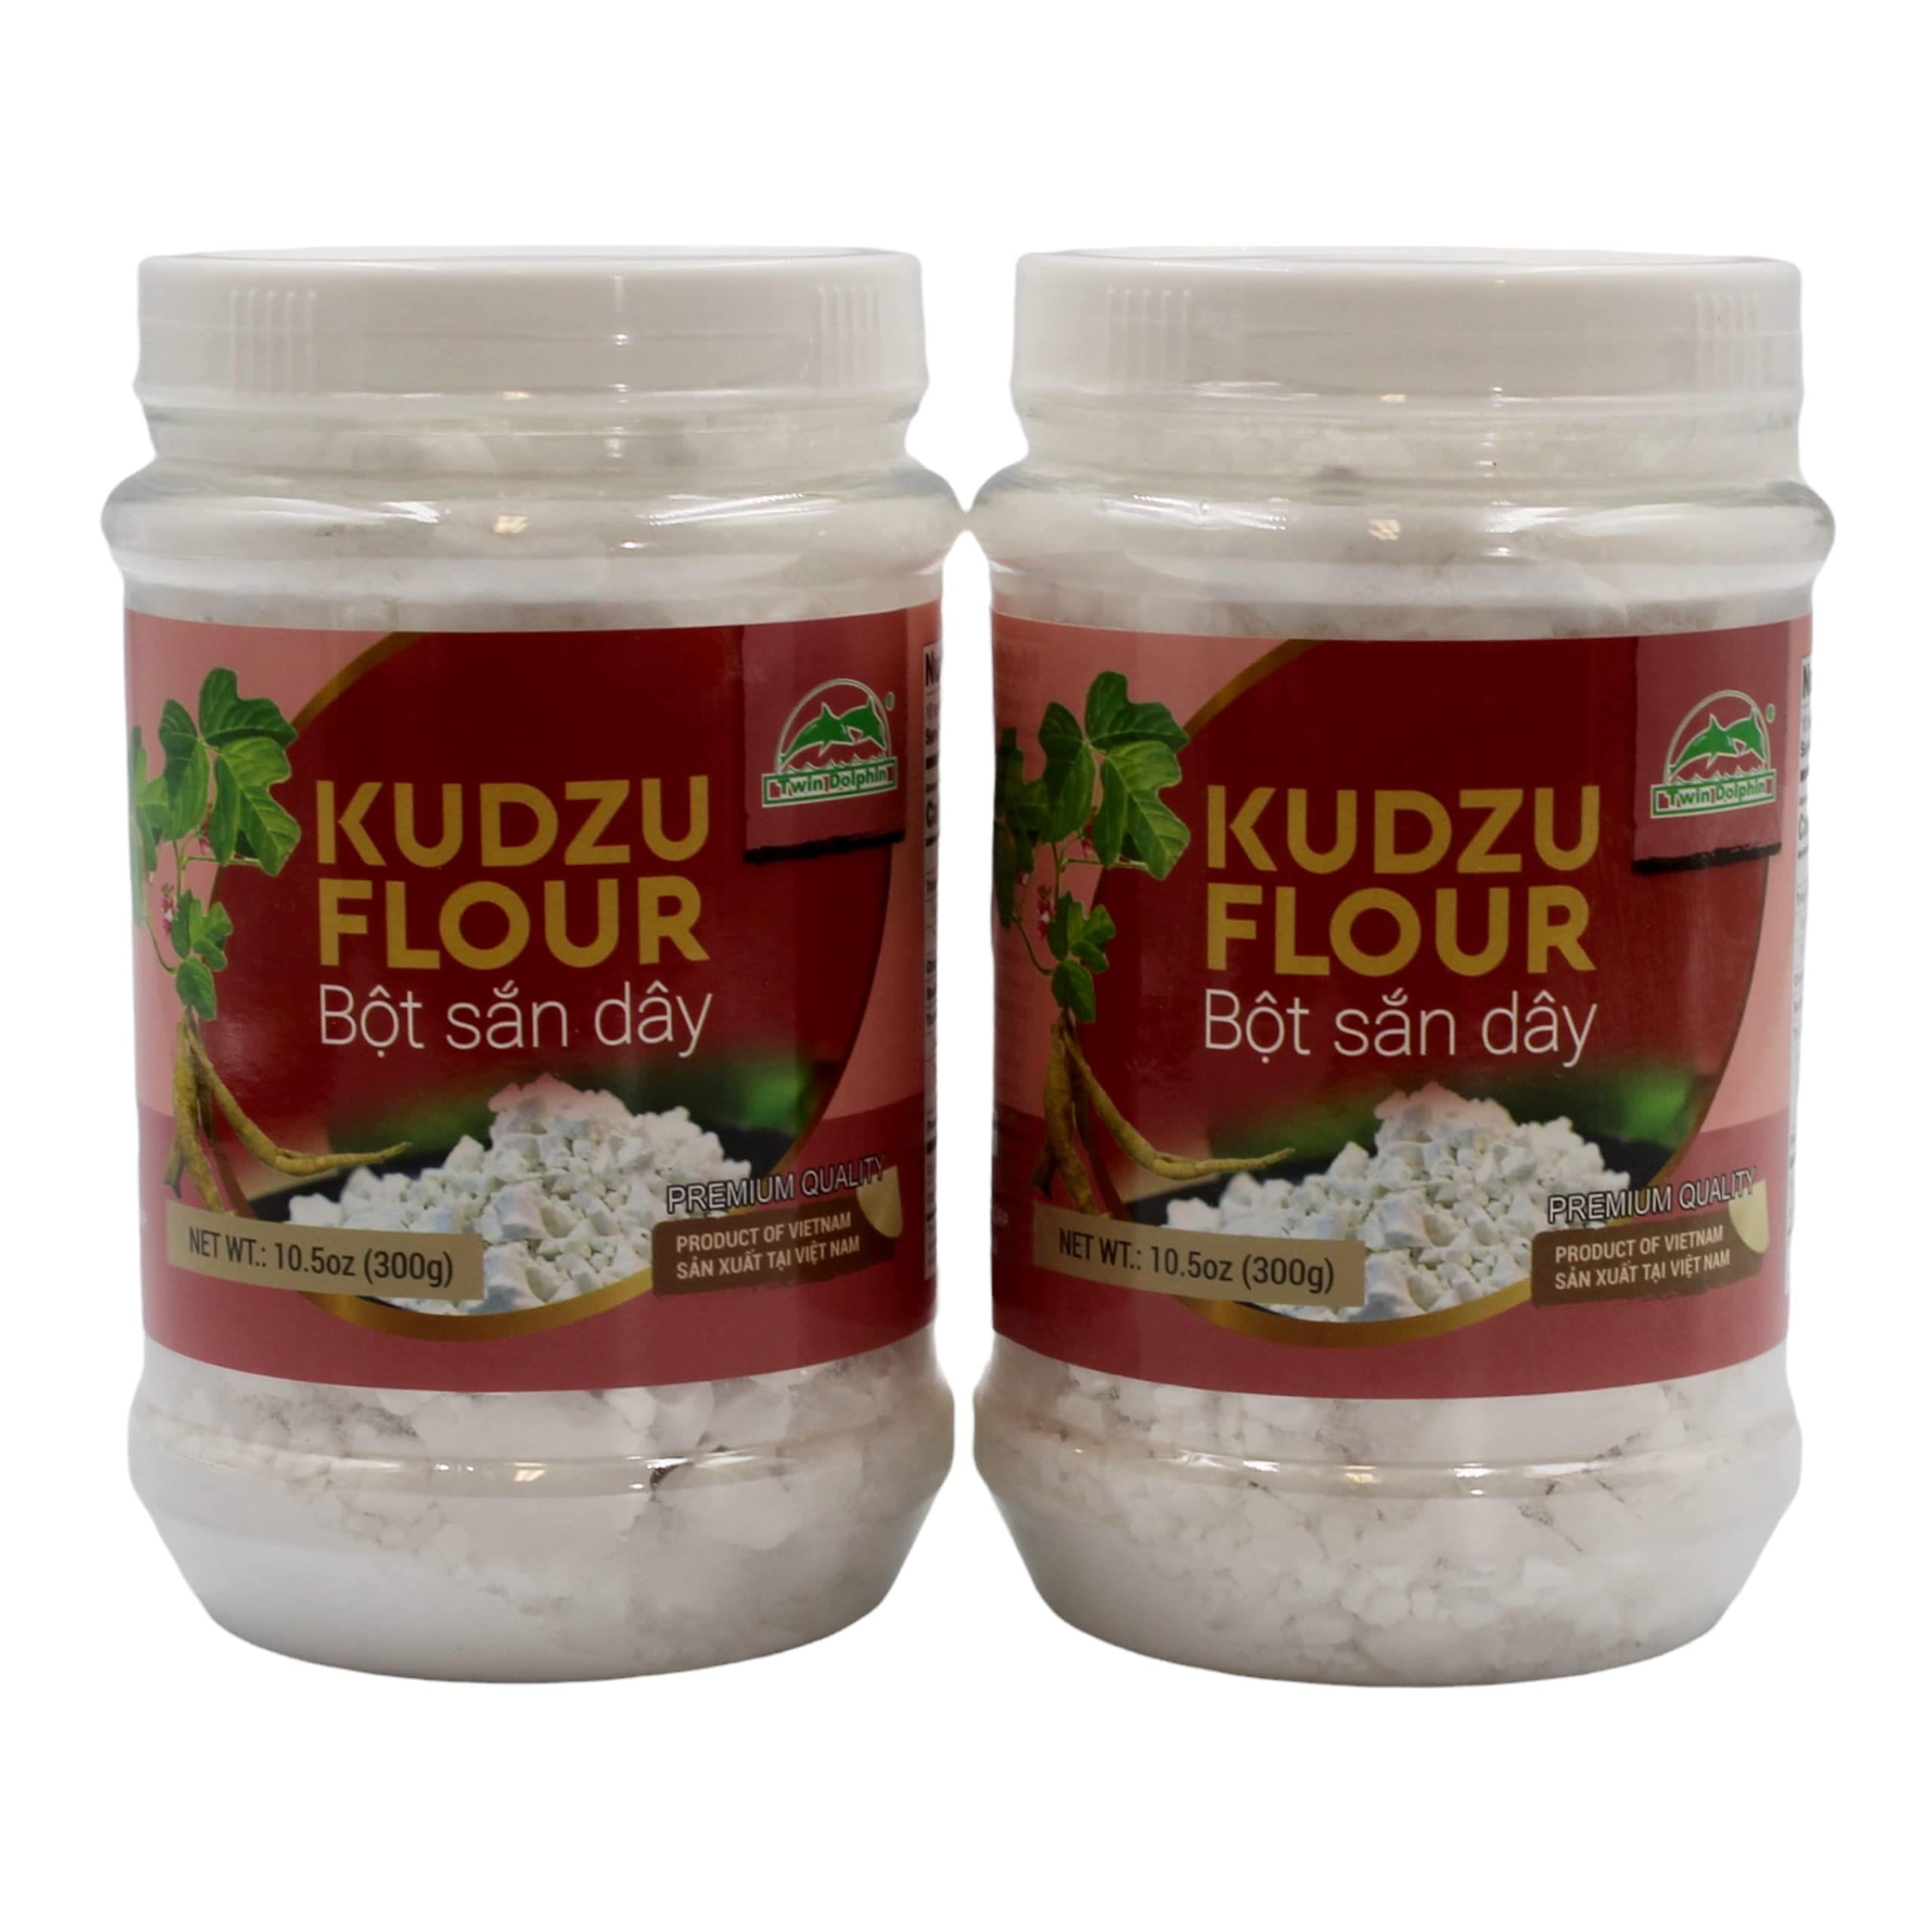 Twin Dolphin Bot San Day Kudzu Flour Chunks, 10.5 Ounce Reclosable Jars [Pack of 2]